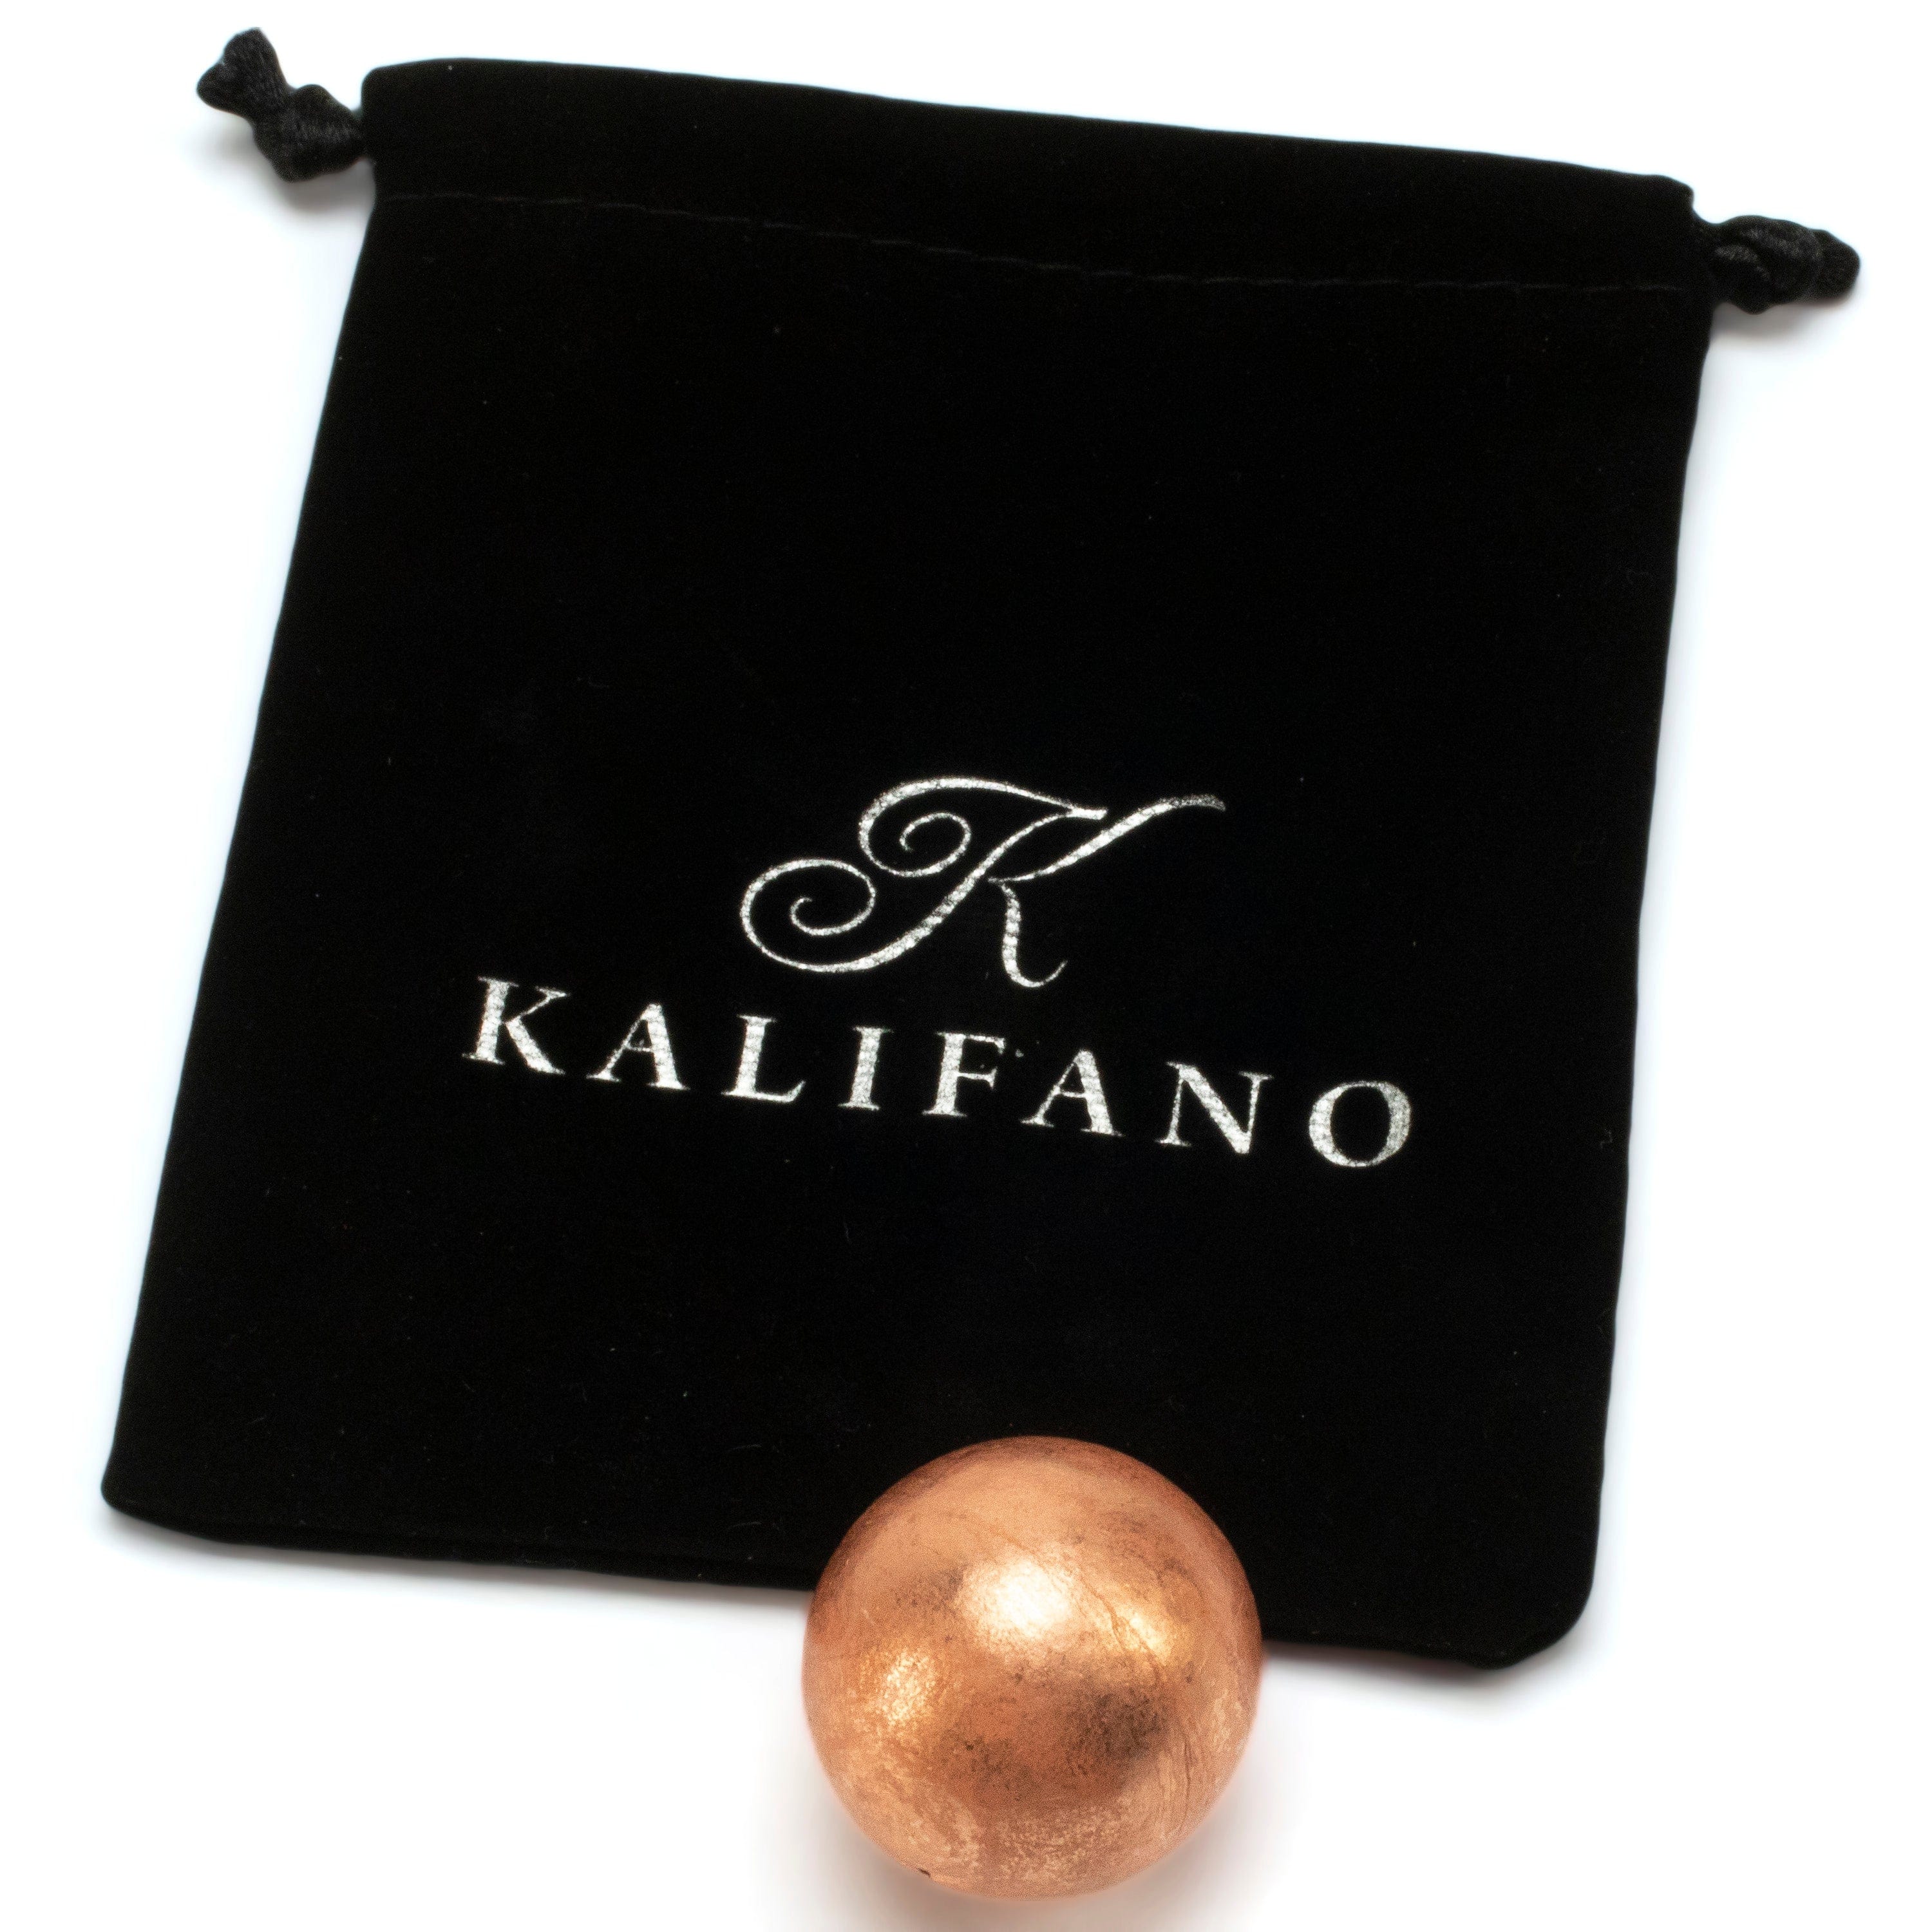 Kalifano Copper Copper Sphere from Michigan - 1.1" / 120g SP80-CPR